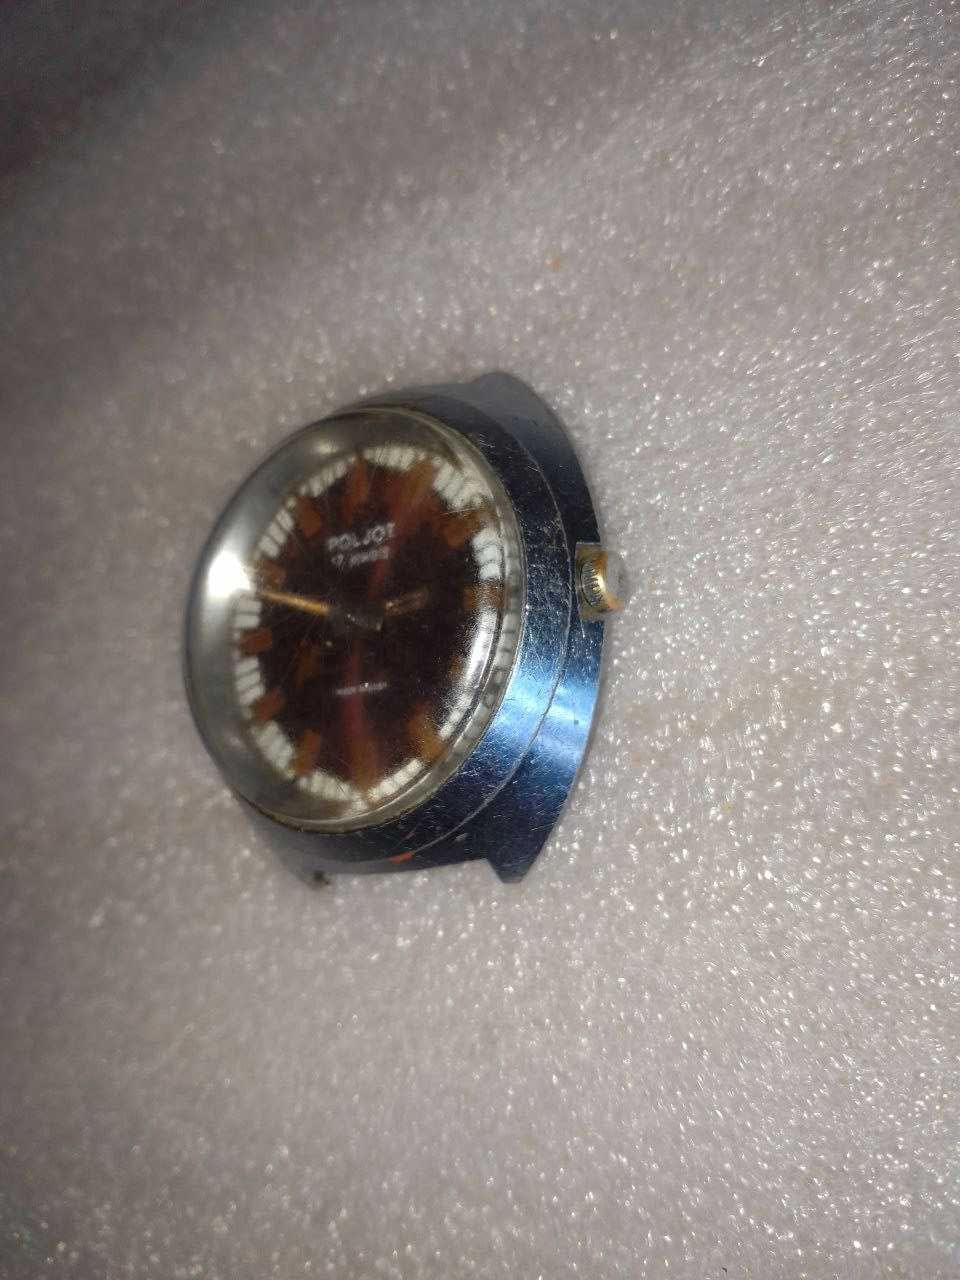 Часы Poljot, 17 Jewels (USSR)